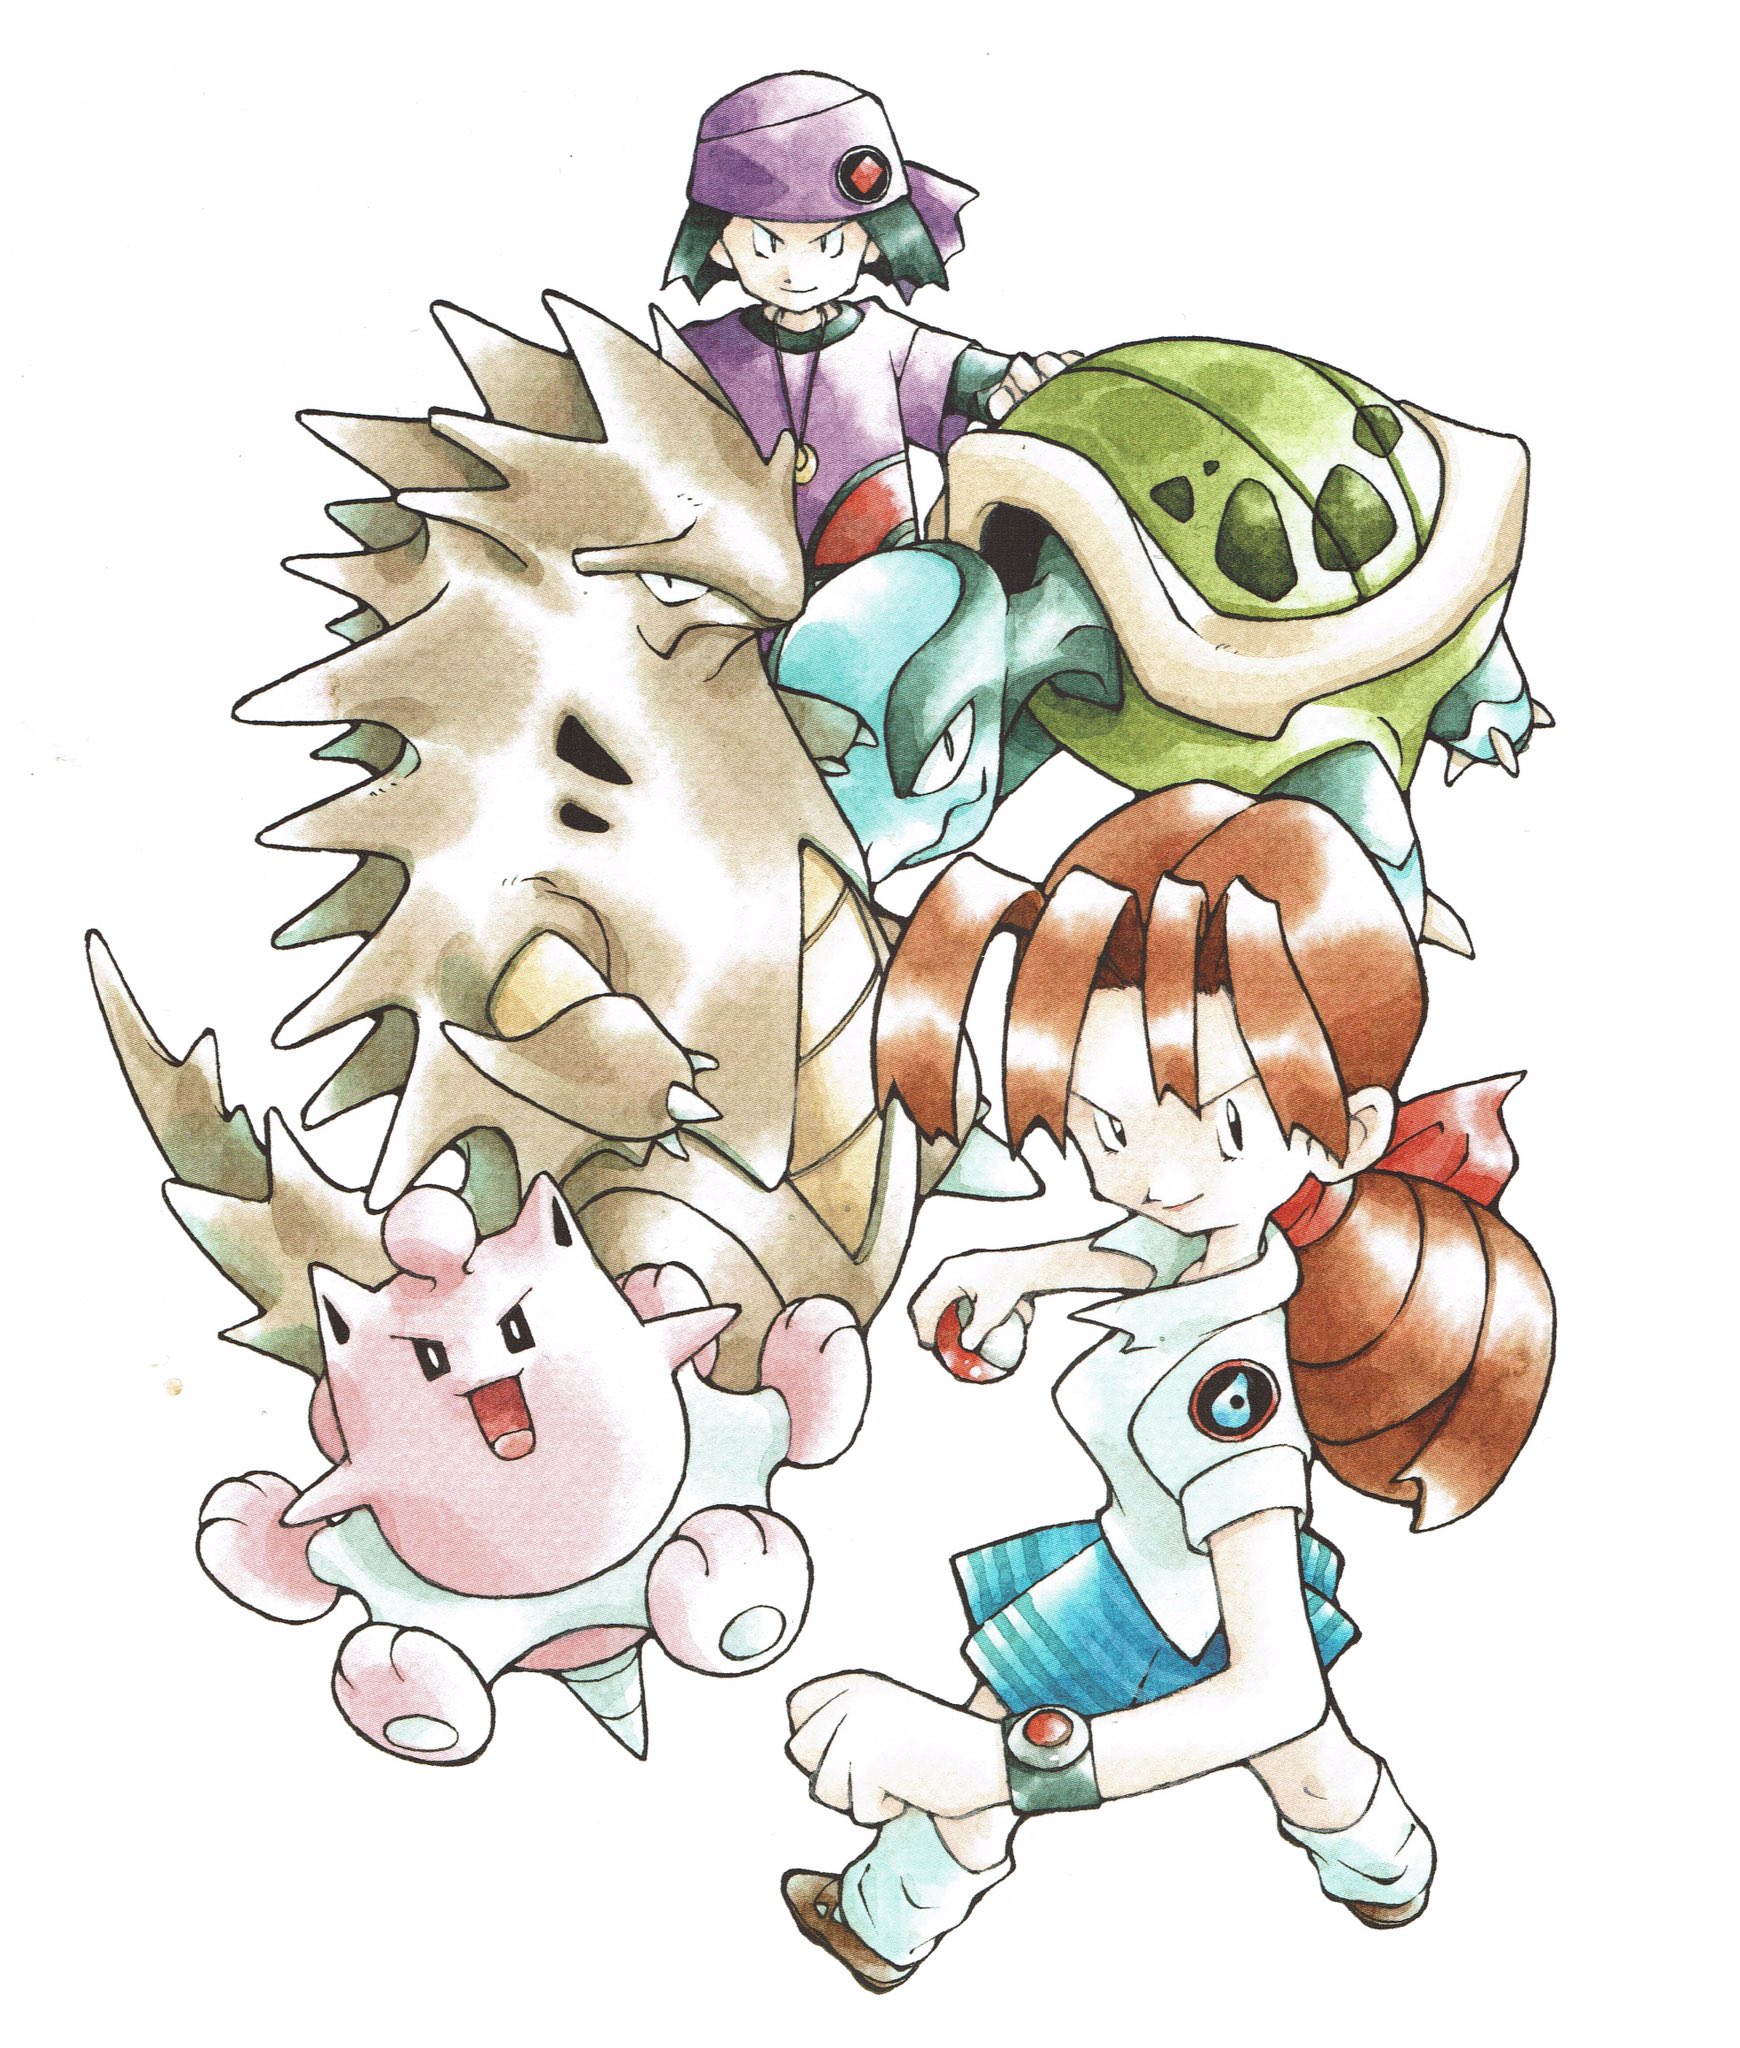 “Early Pokémon artwork from Ken Sugimori.” 